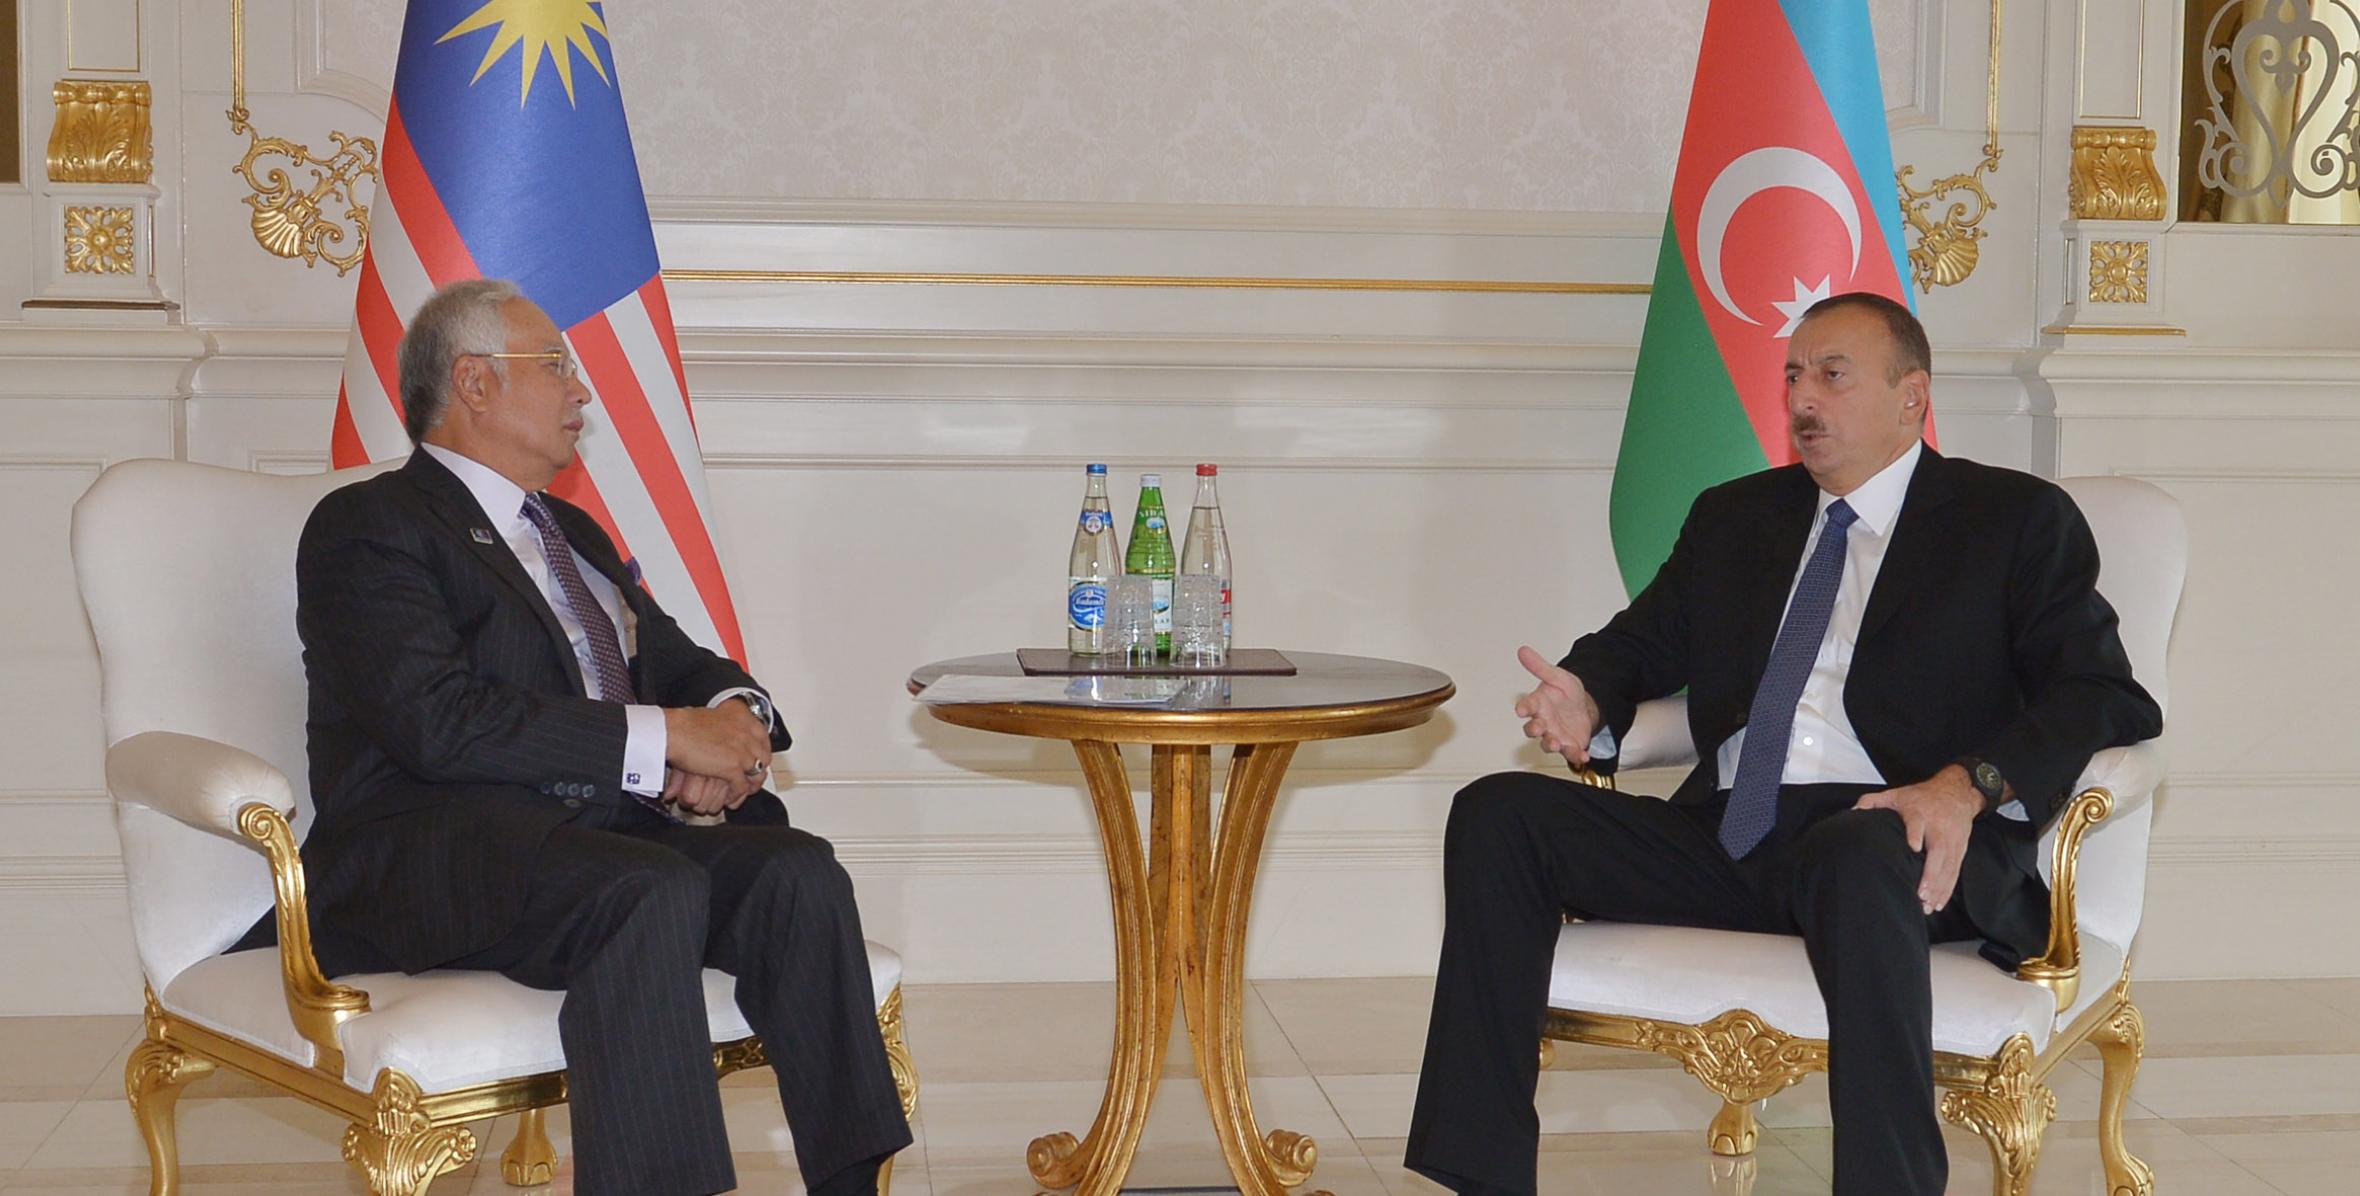 Ilham Aliyev and Prime Minister of Malaysia Mohammad Najib Tun Abdul Razak held a one-on-one meeting